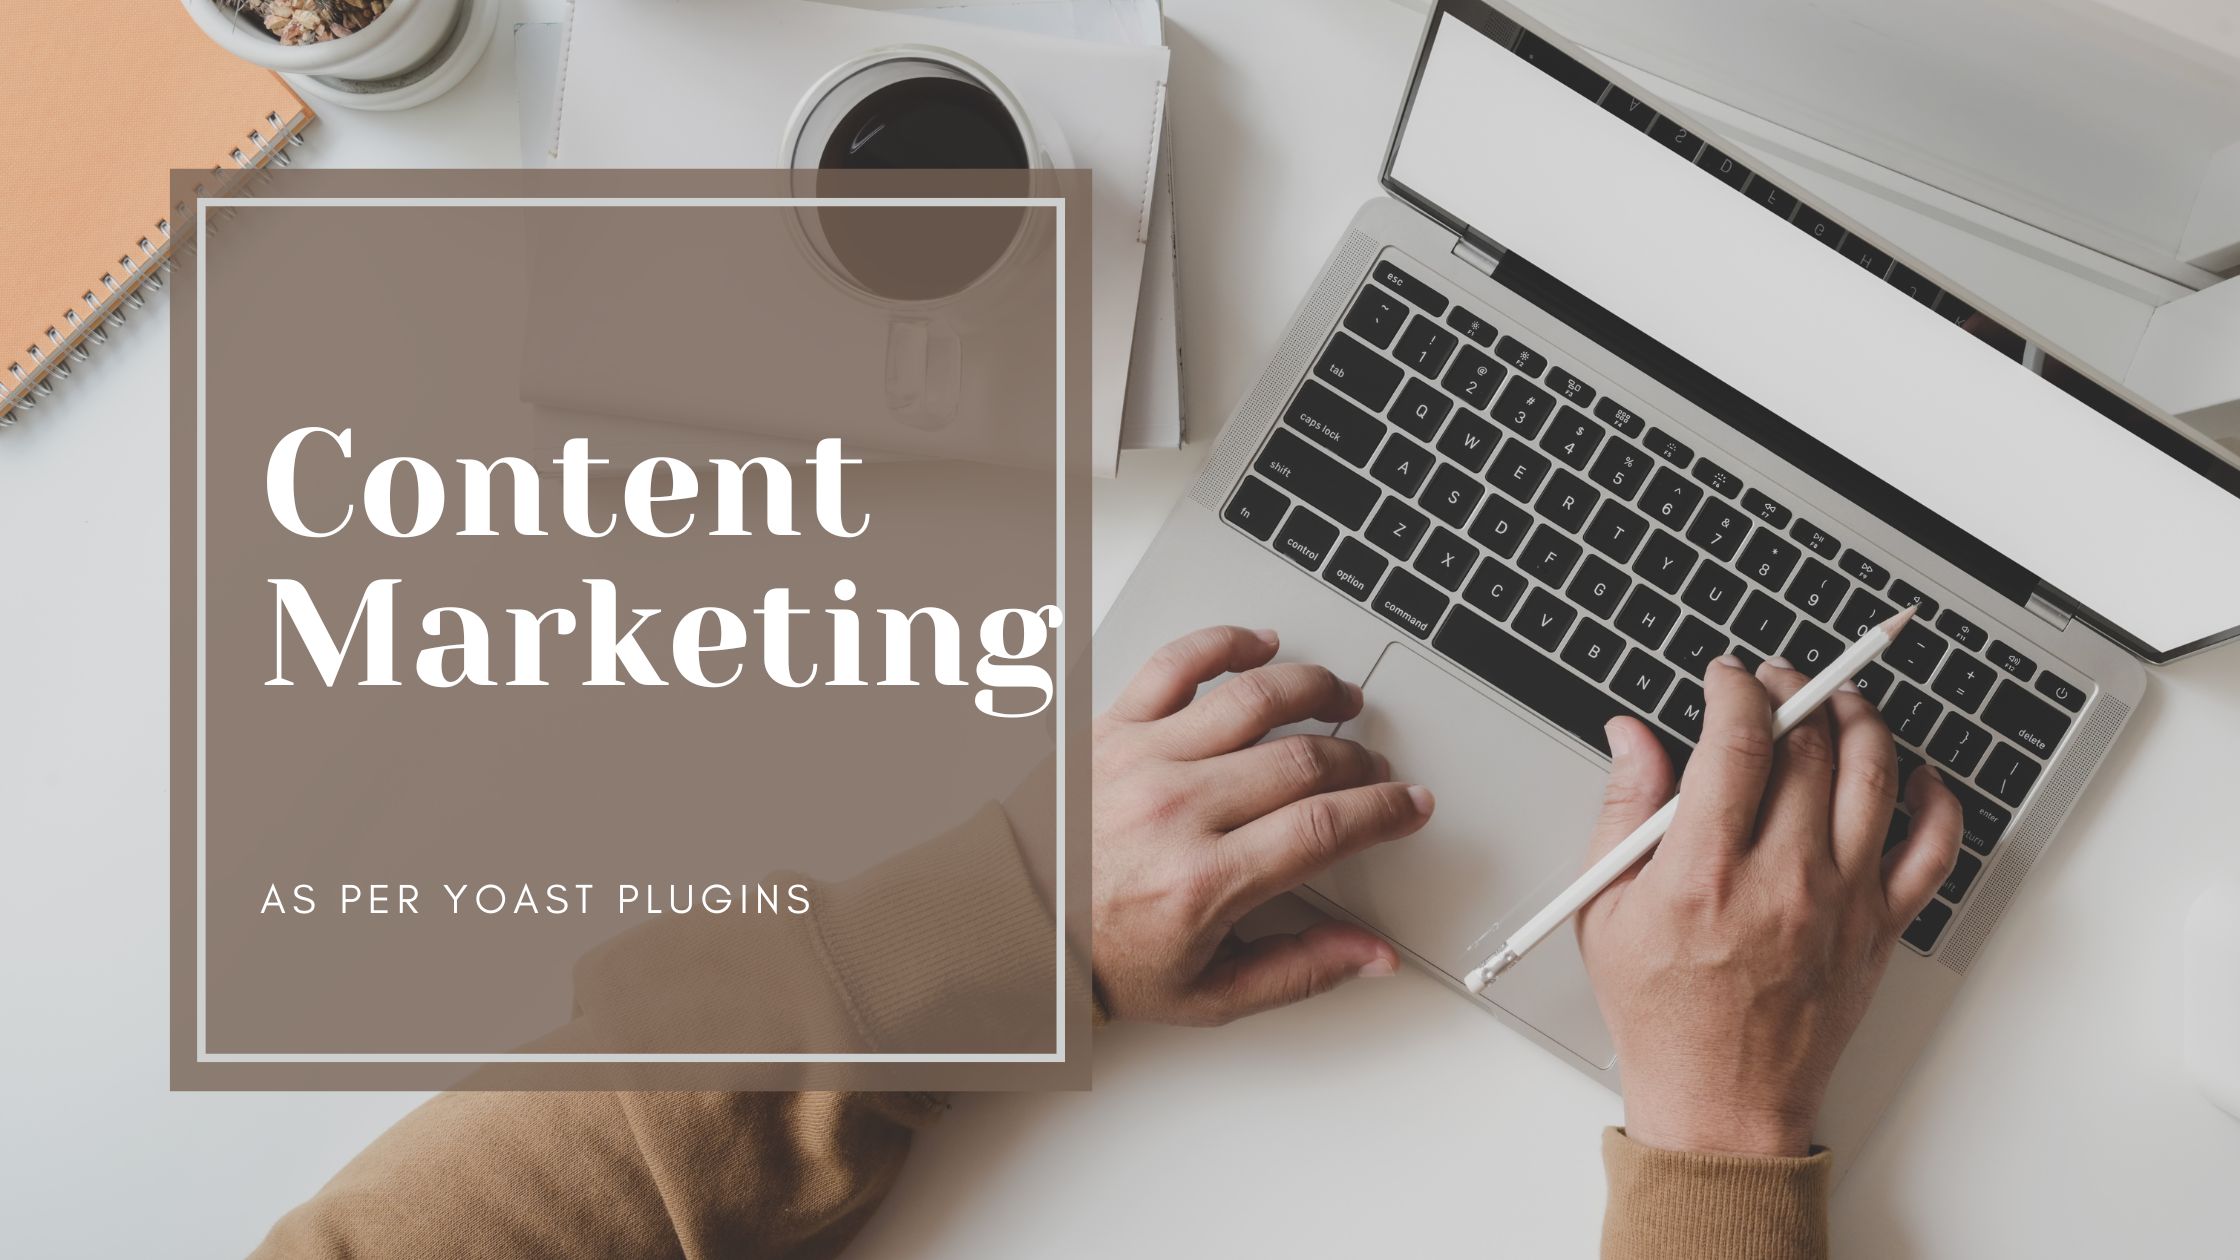 Content Marketing by Yoast Plugin for Wordpress